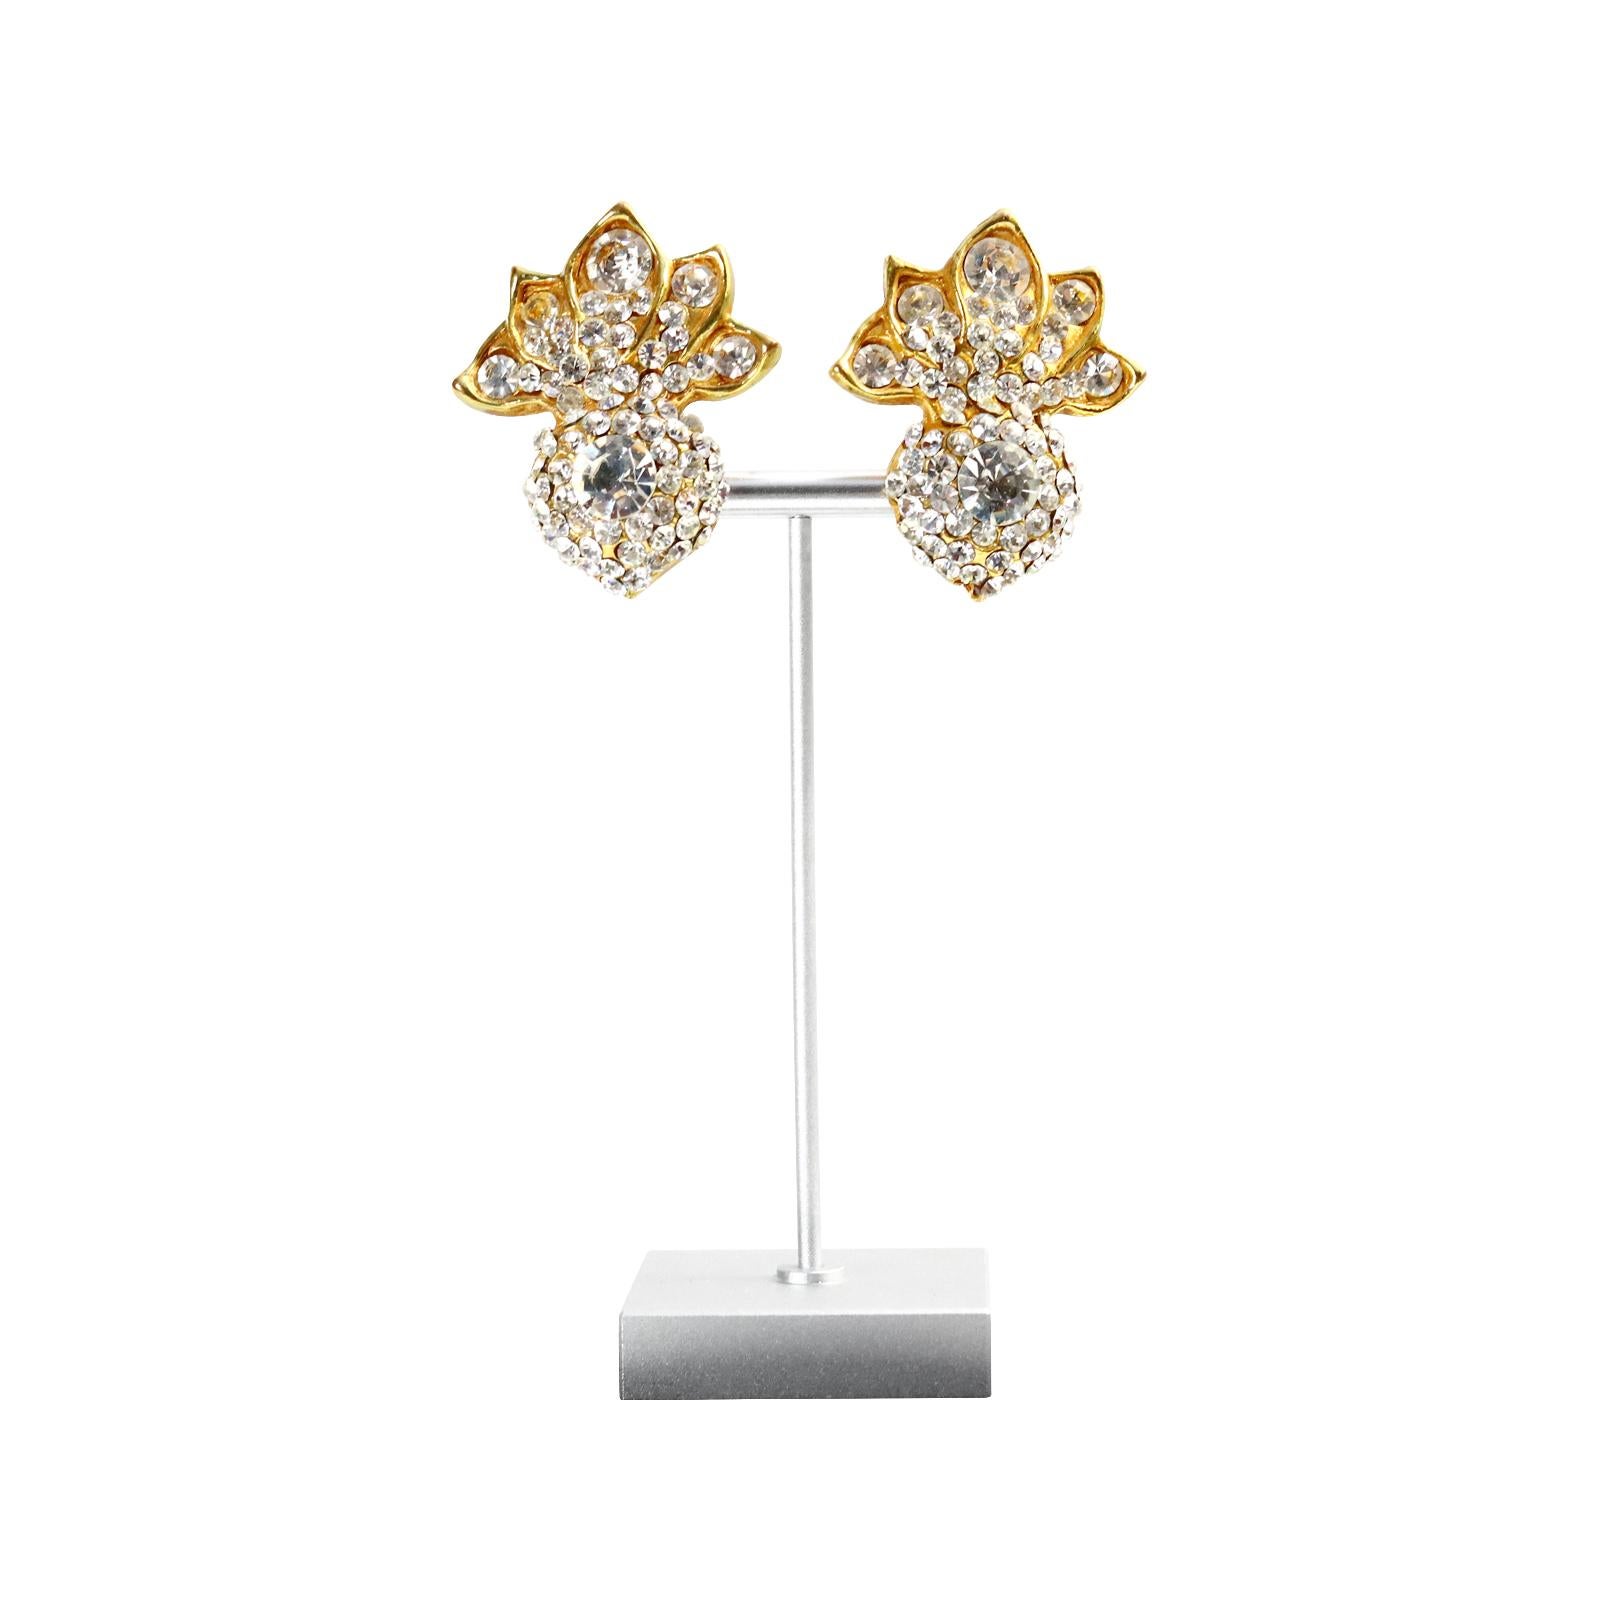 Vintage Lorenz Baumer Gold Tone Crystal Earrings Circa 1980s Bon état - En vente à New York, NY